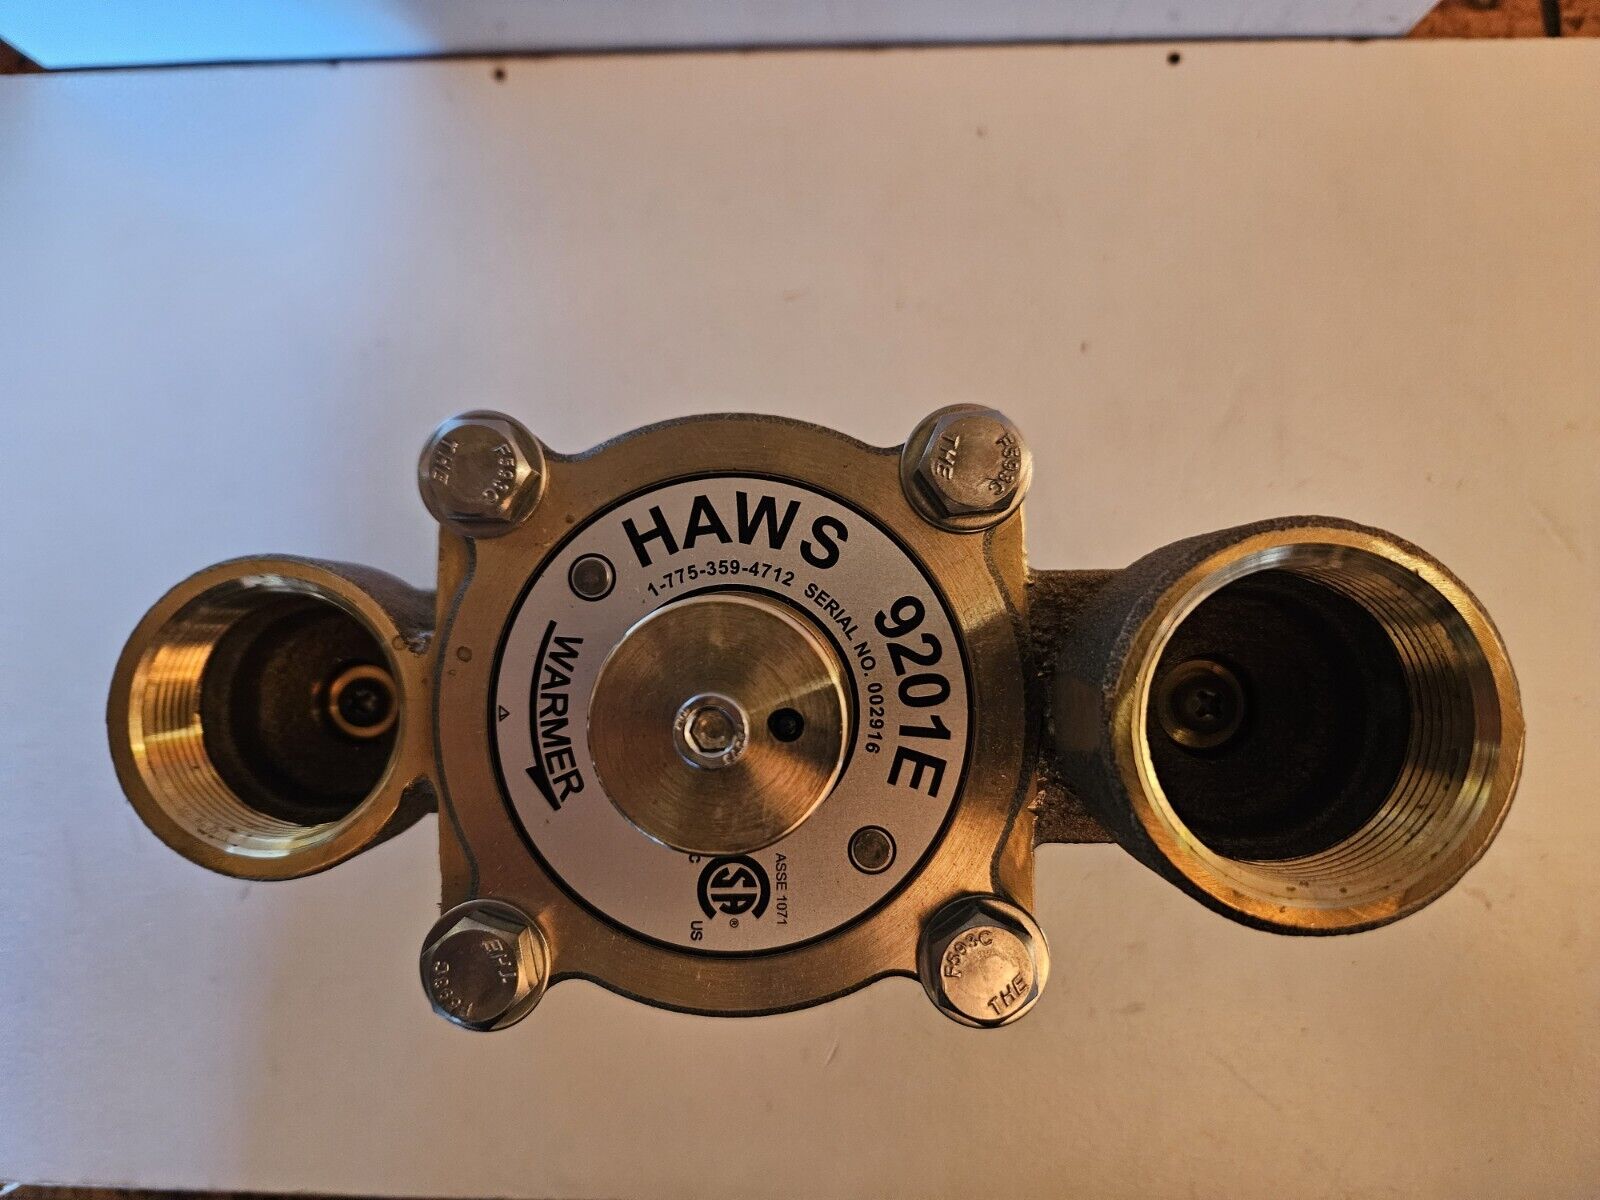 Haws, 9201E, Thermostatic Emergency Mixing Valve